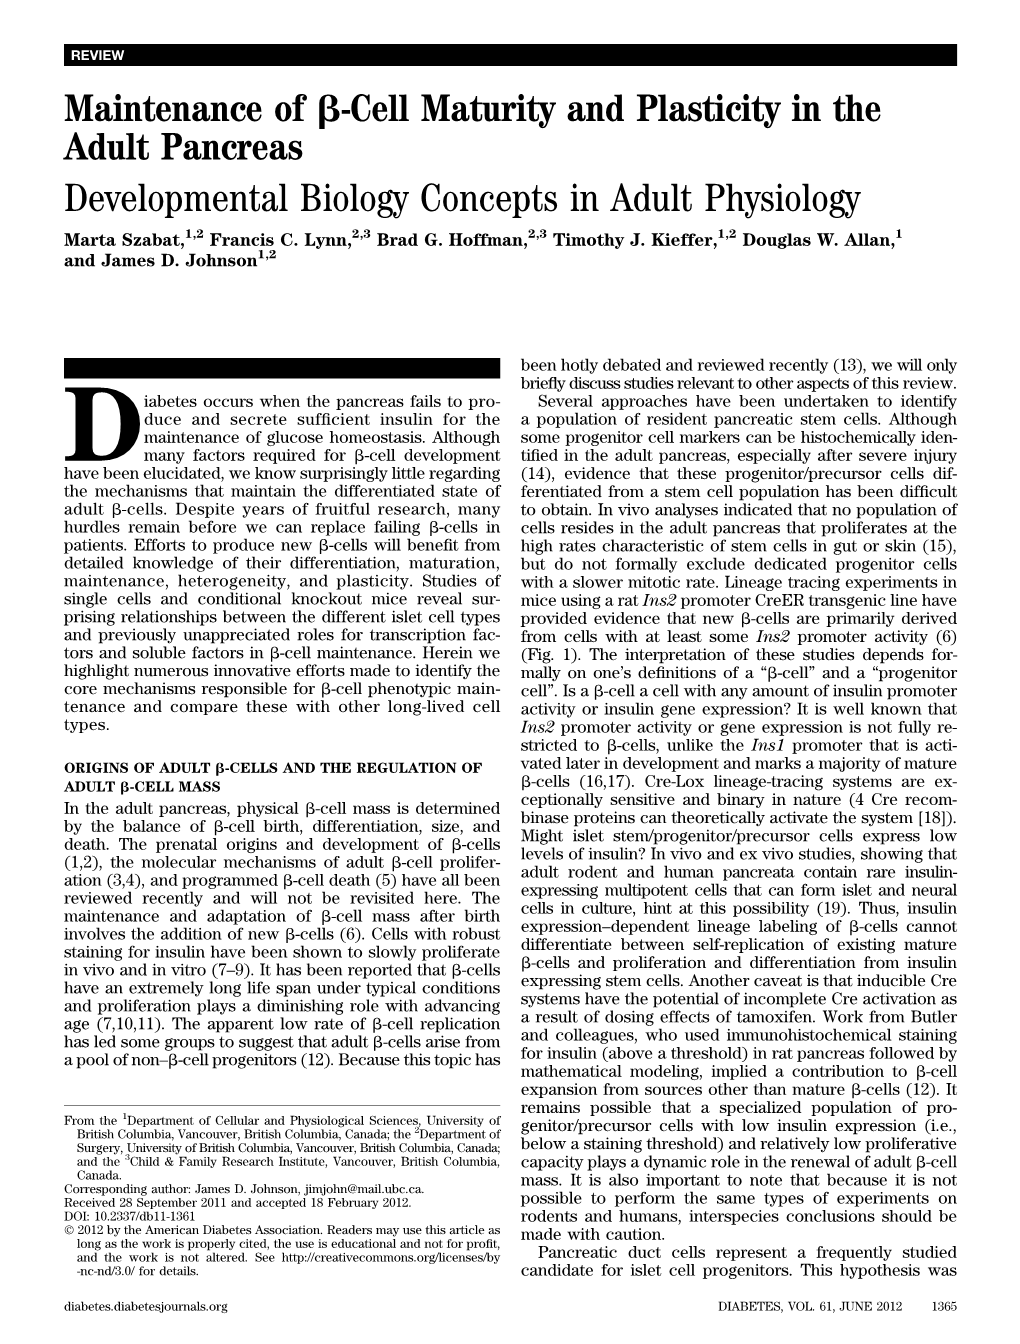 Developmental Biology Concepts in Adult Physiology Marta Szabat,1,2 Francis C